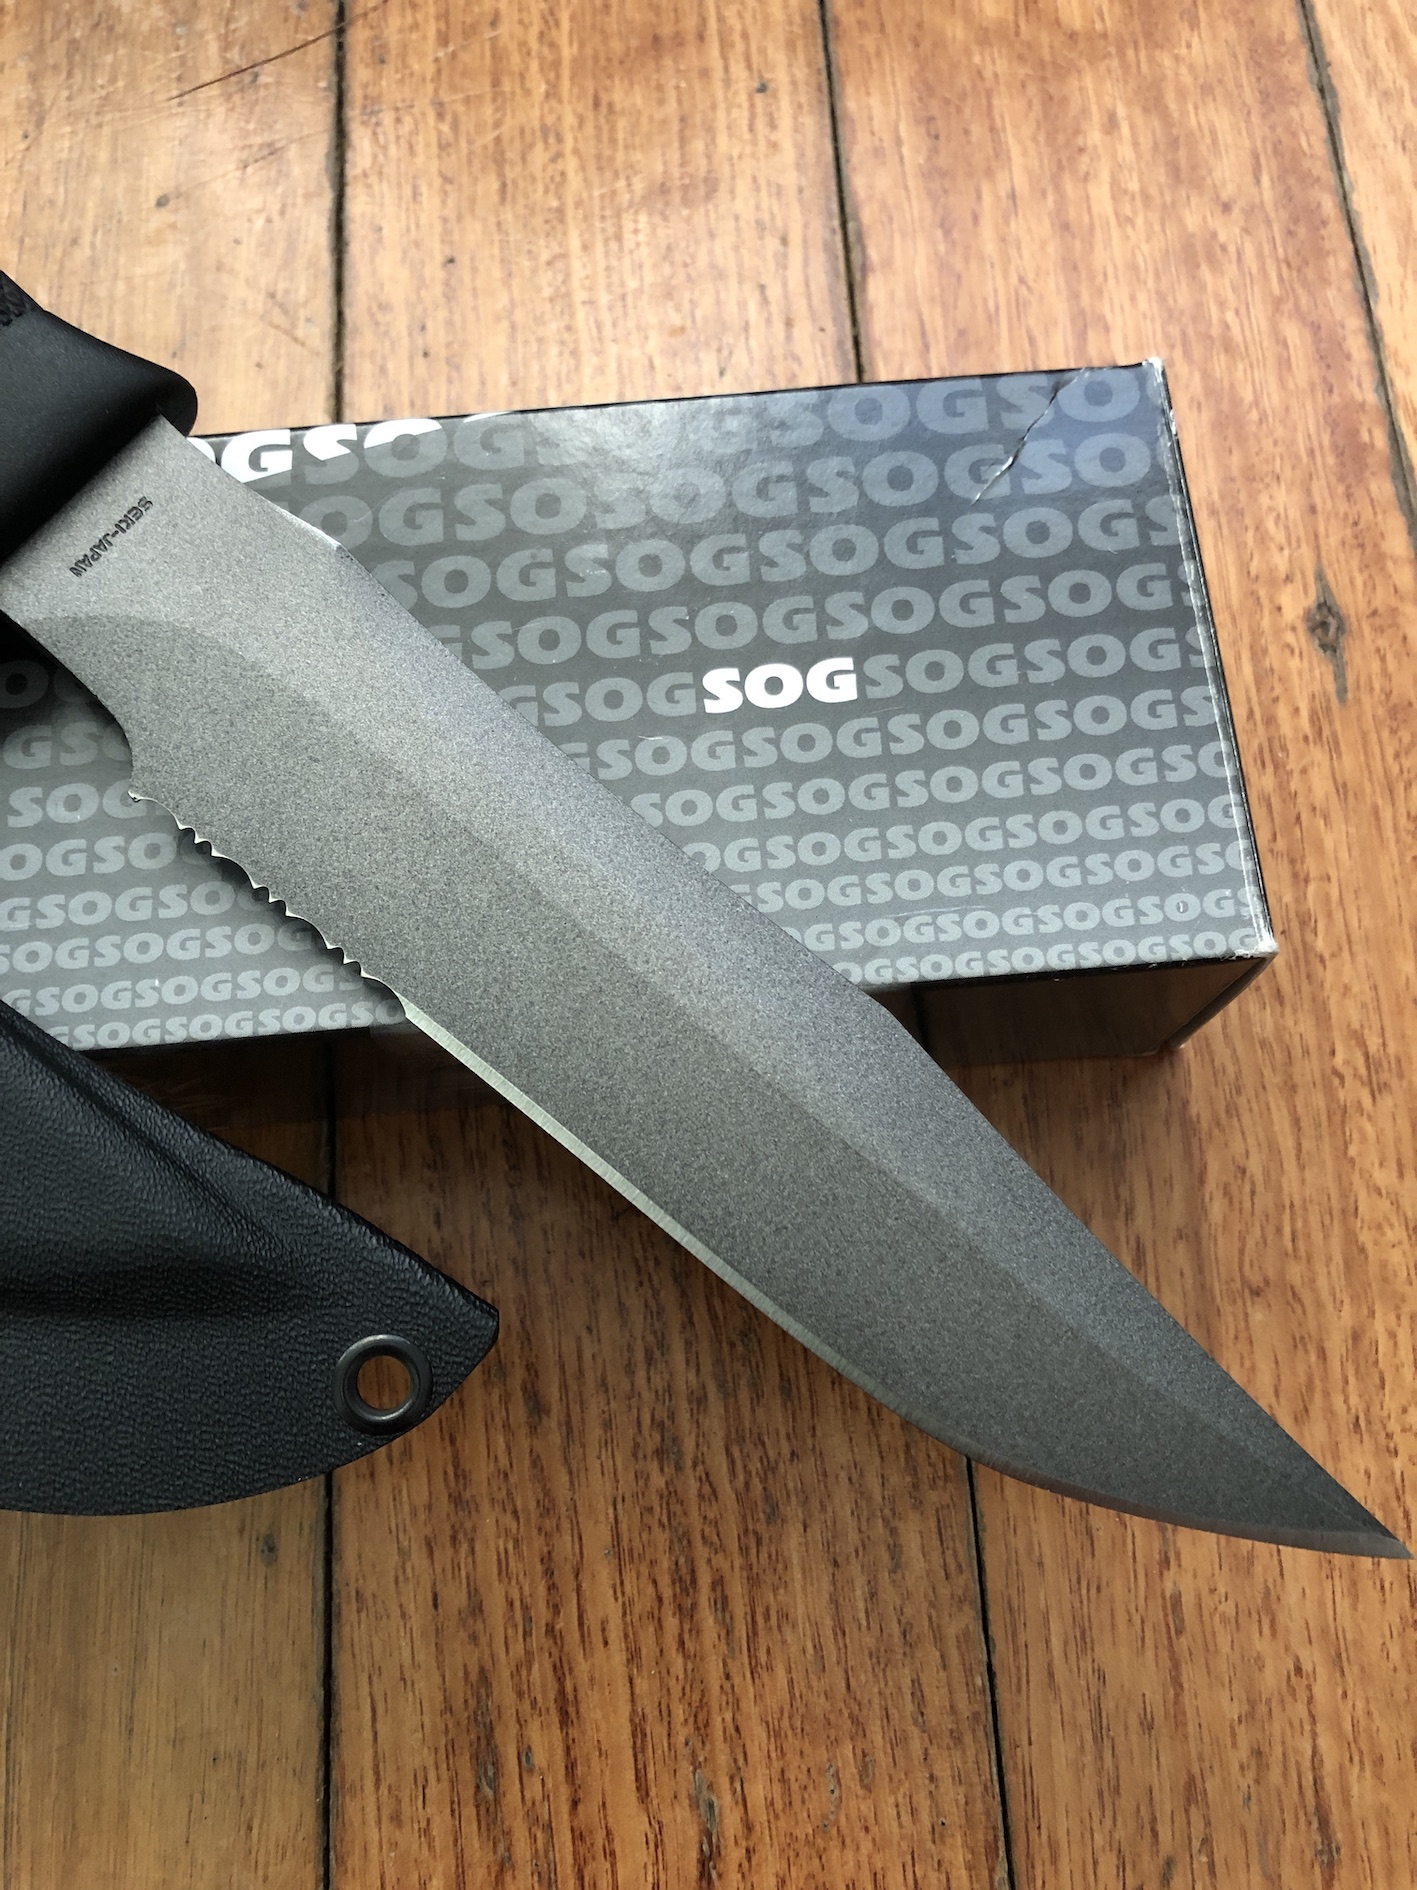 Sog Vintage Original Seki Japan S37 Navy Seal Knife With Kydex Sheath